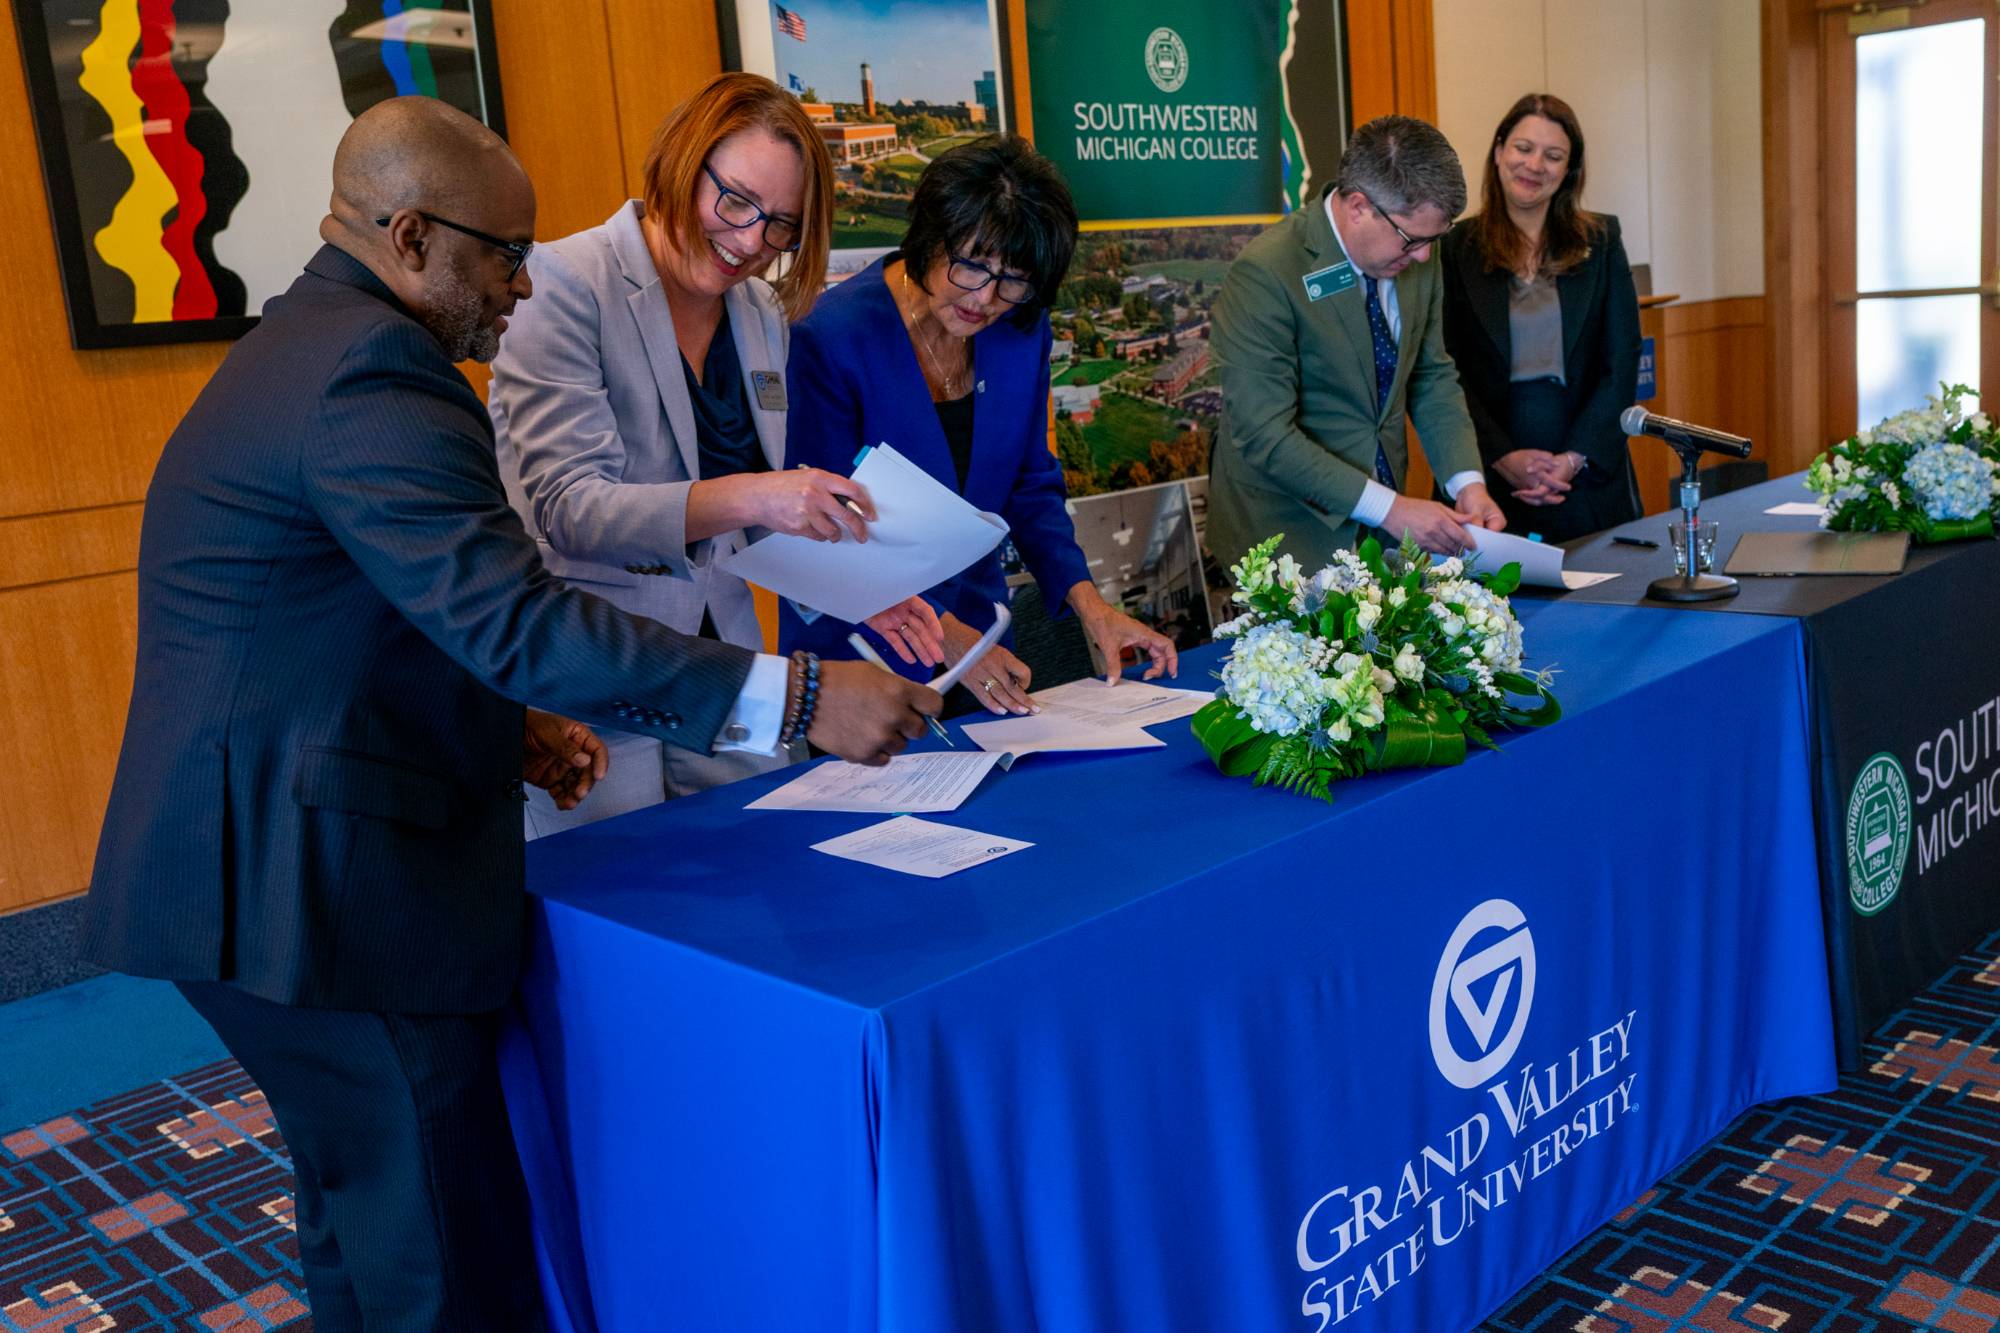 Southwestern Michigan College and GVSU representatives signing an agreement